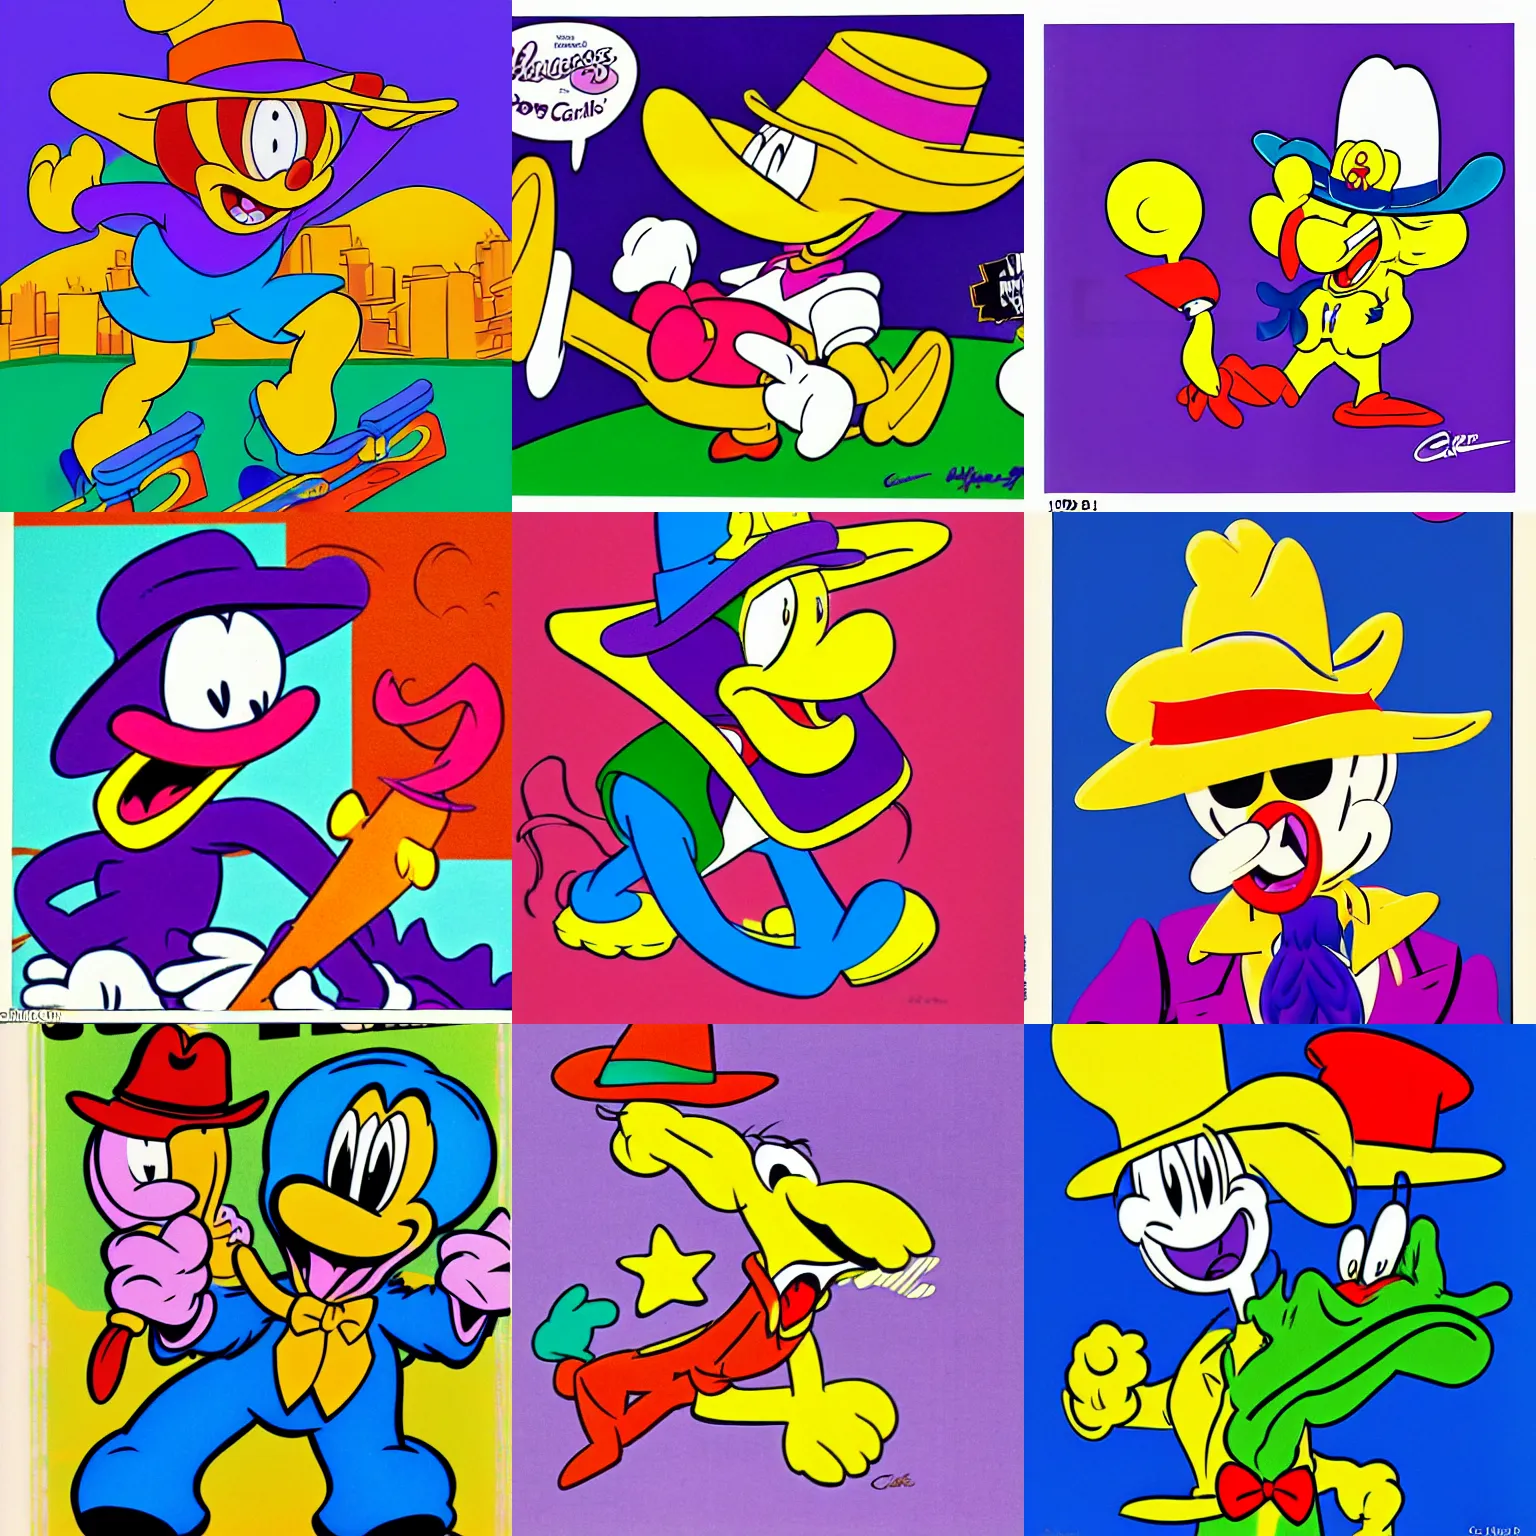 Prompt: 1990's childrens cartoon cereal mascot resembling a purple alligator cowboy salesman art by carl barks, art by walt disney, art by chuck jones